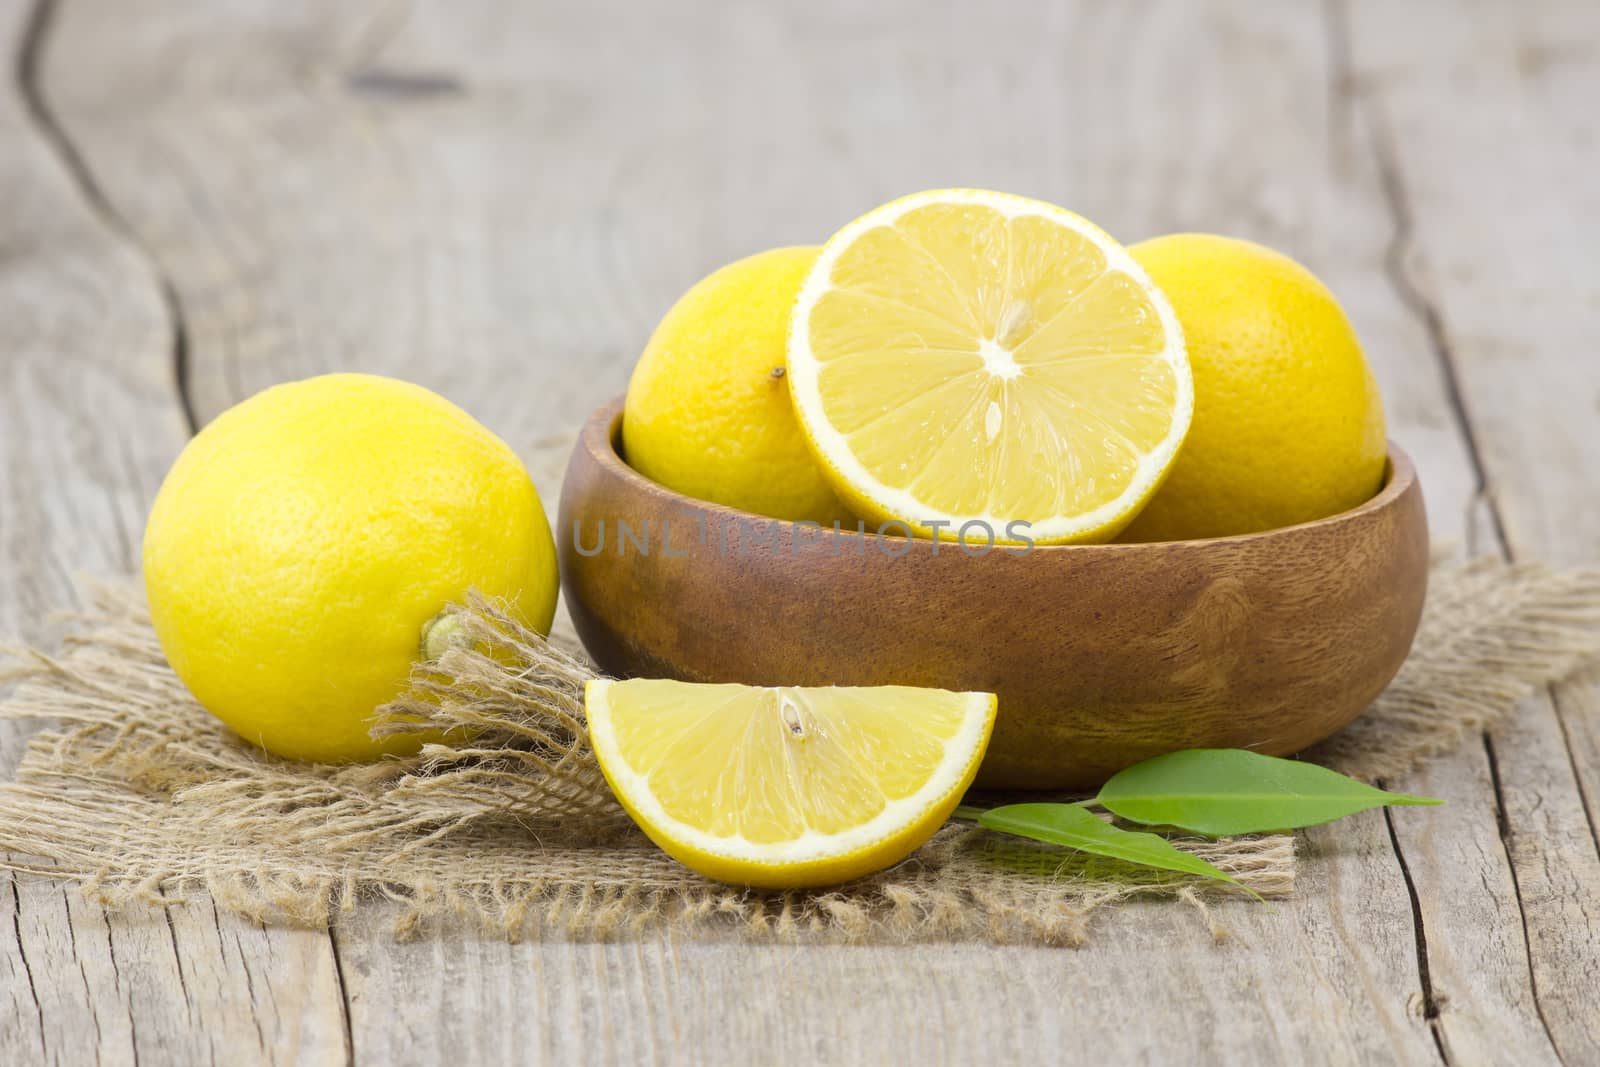 fresh lemons in a bowl on wooden background